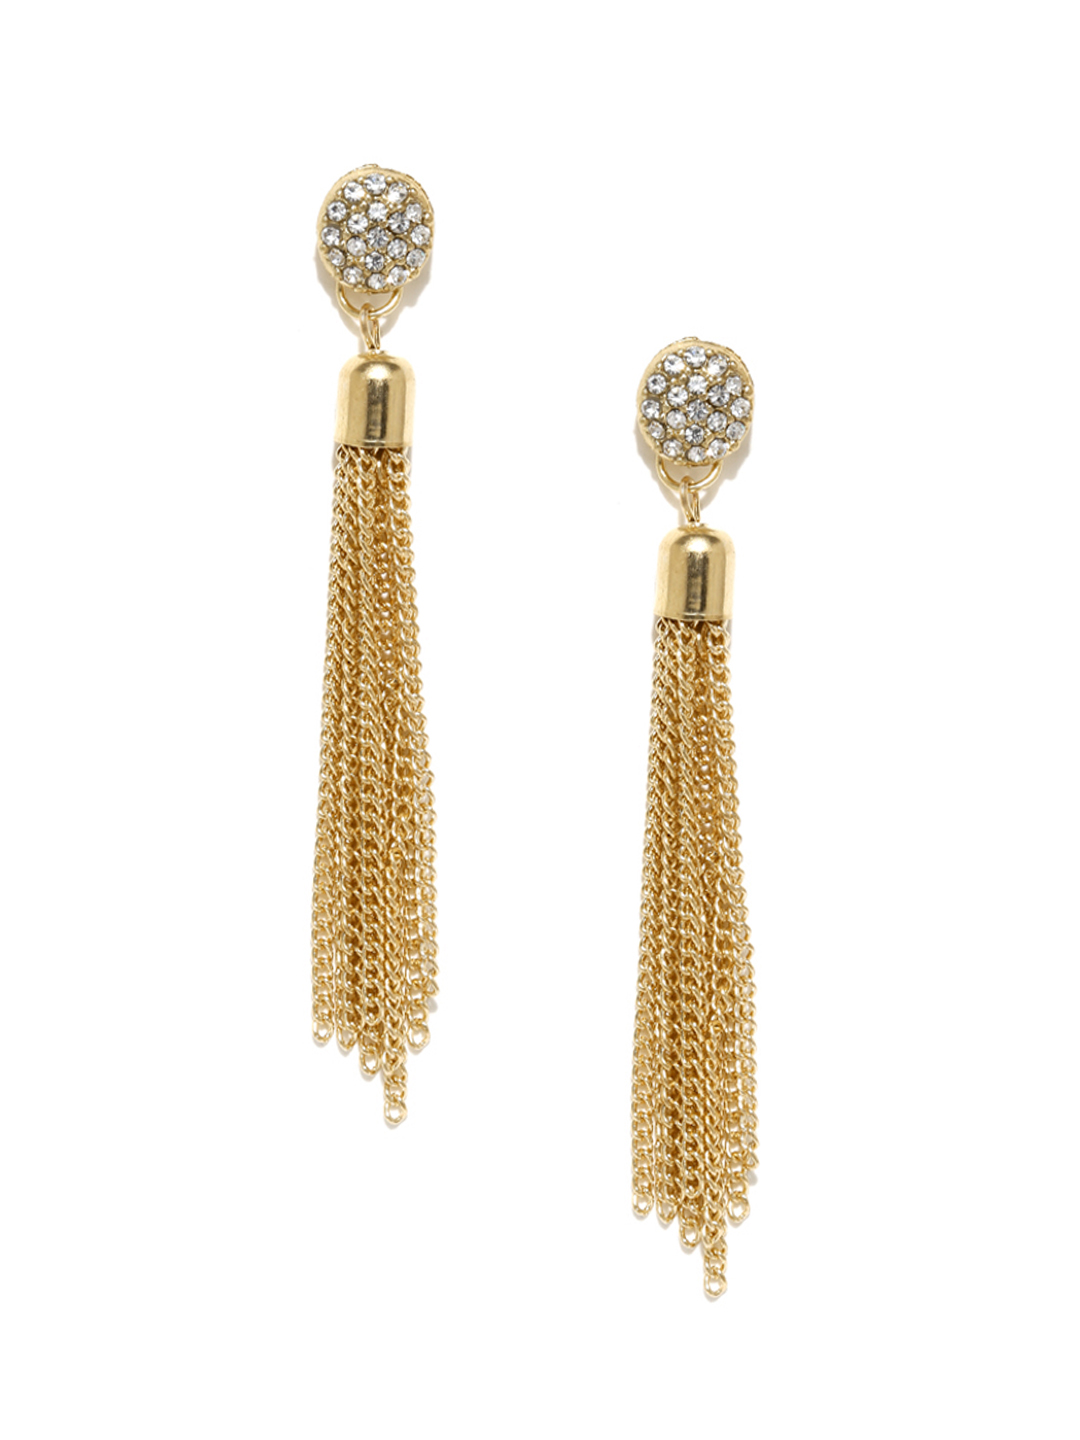 ToniQ Gold-Toned Stone-Studded Tasseled Drop Earrings